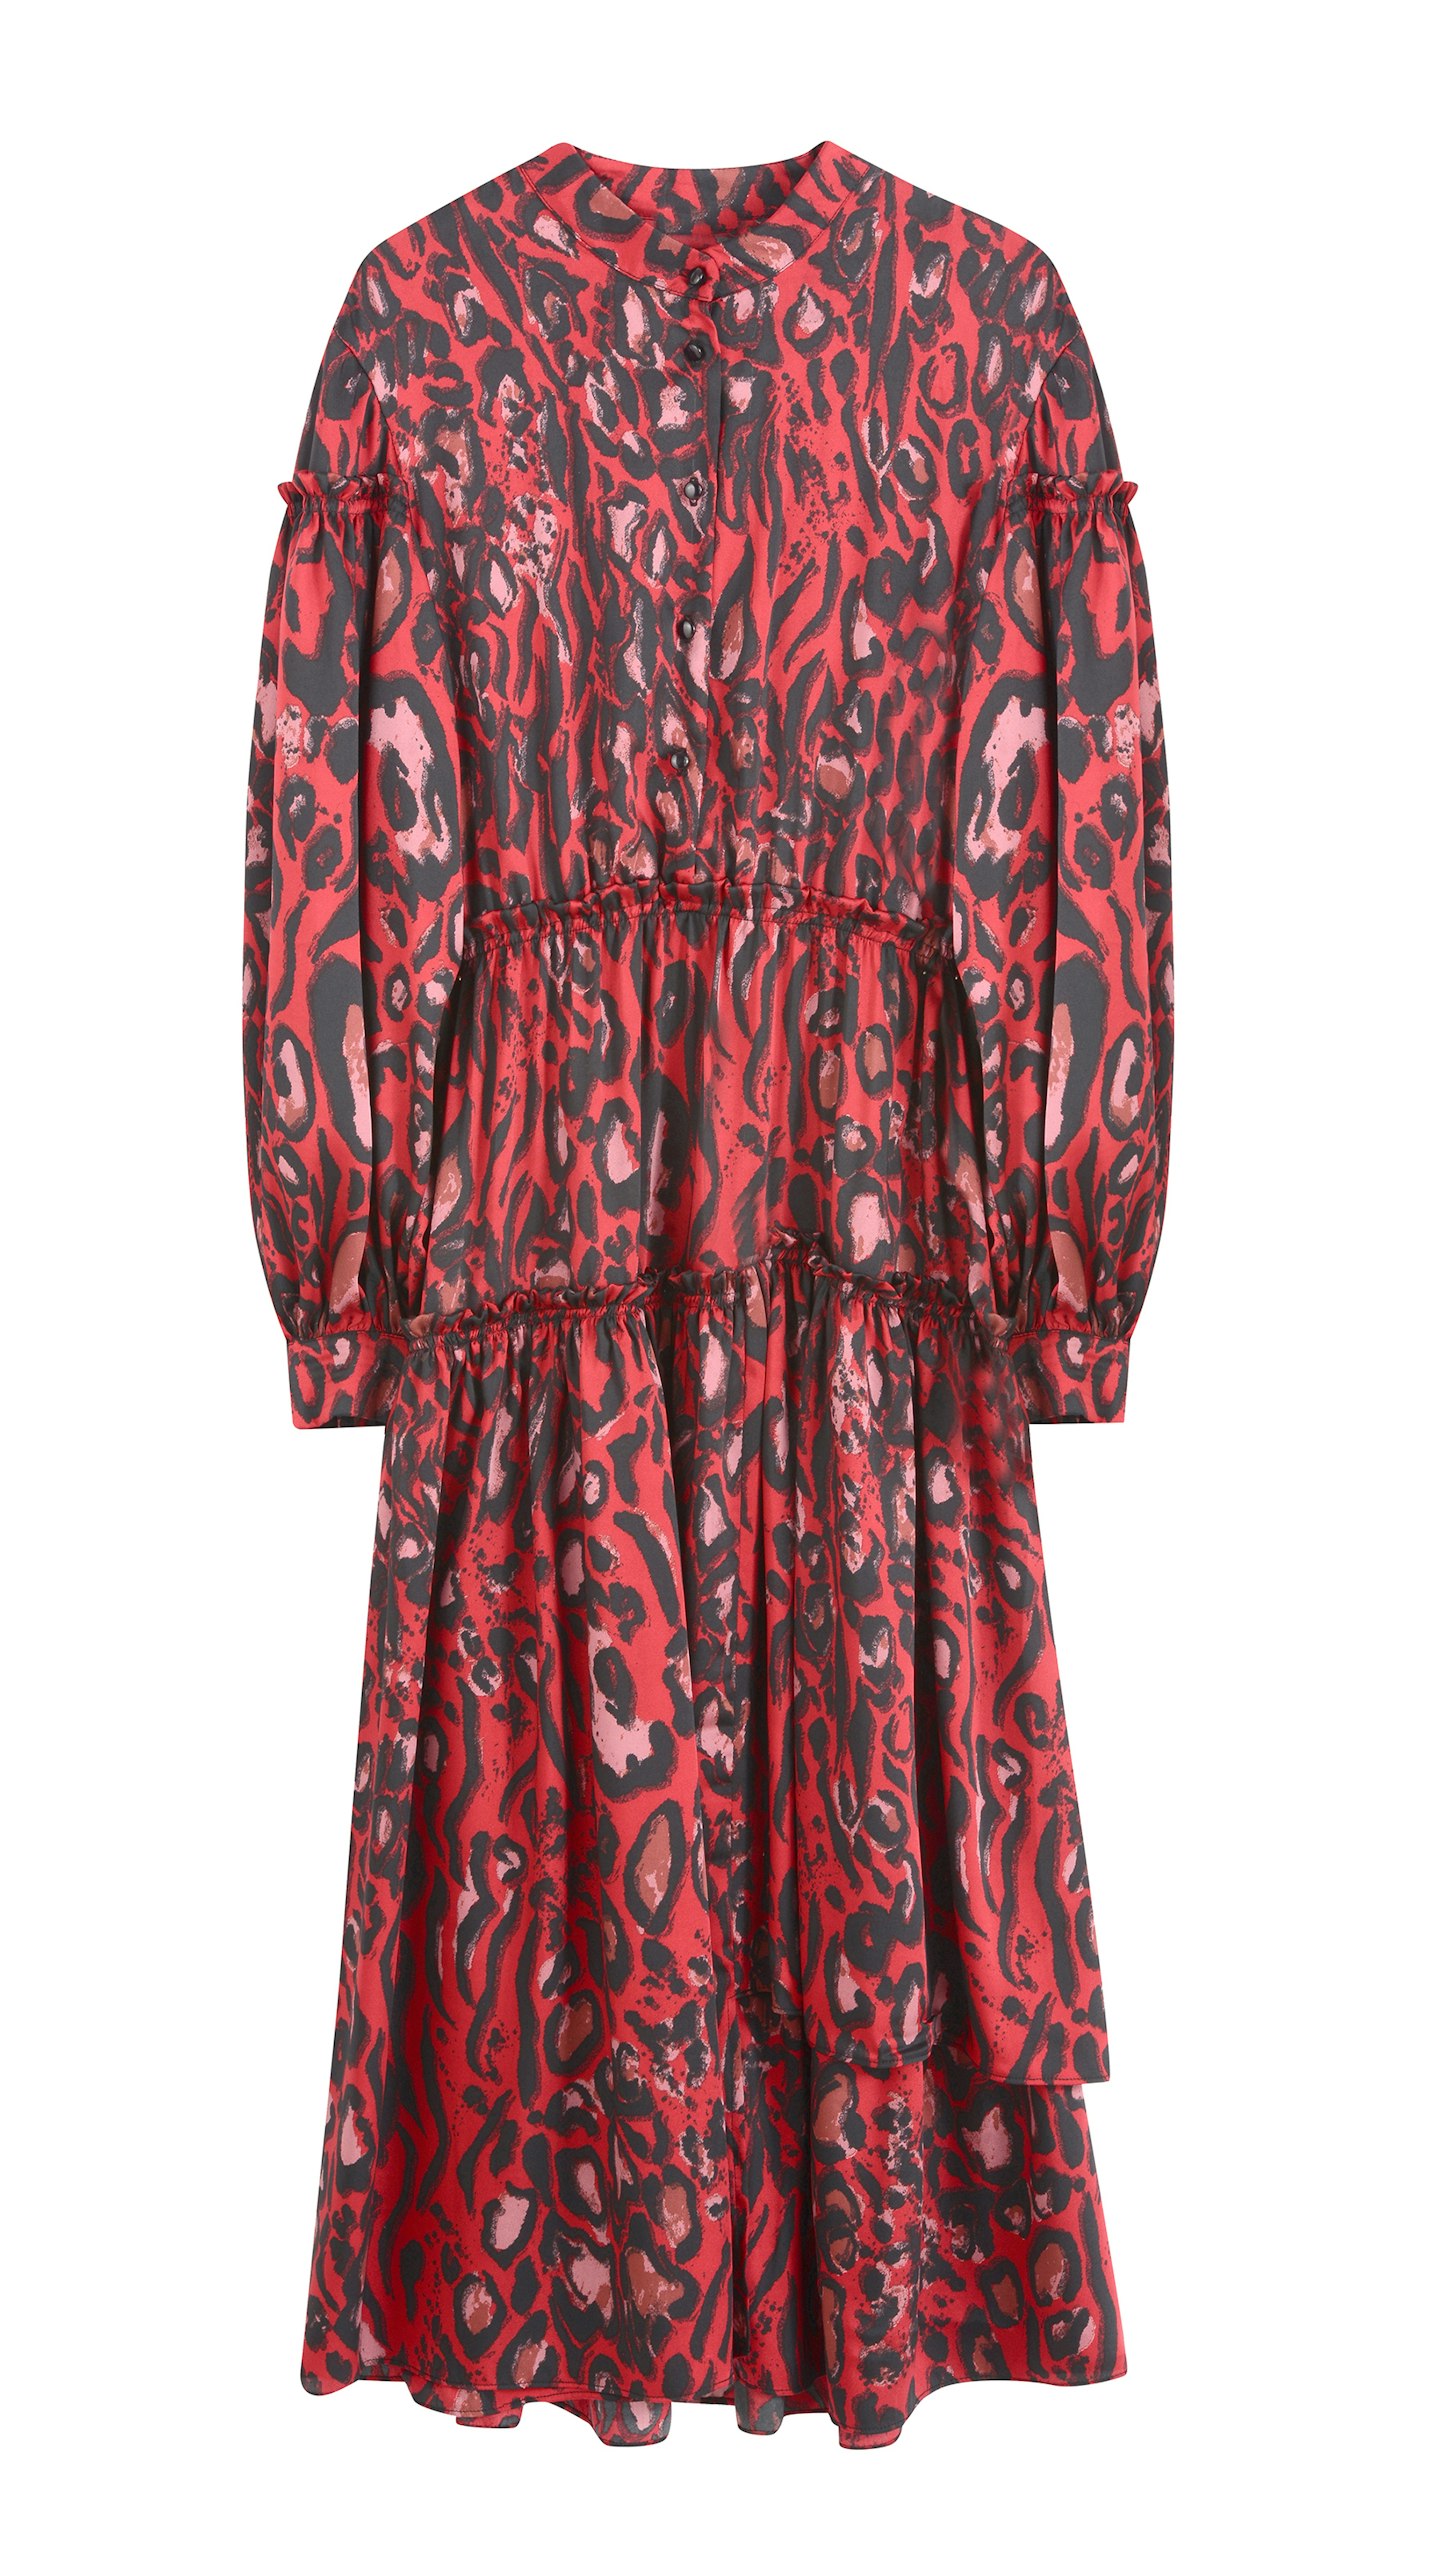 Topshop, Idol Red Animal Print Midi Dress, £49.99